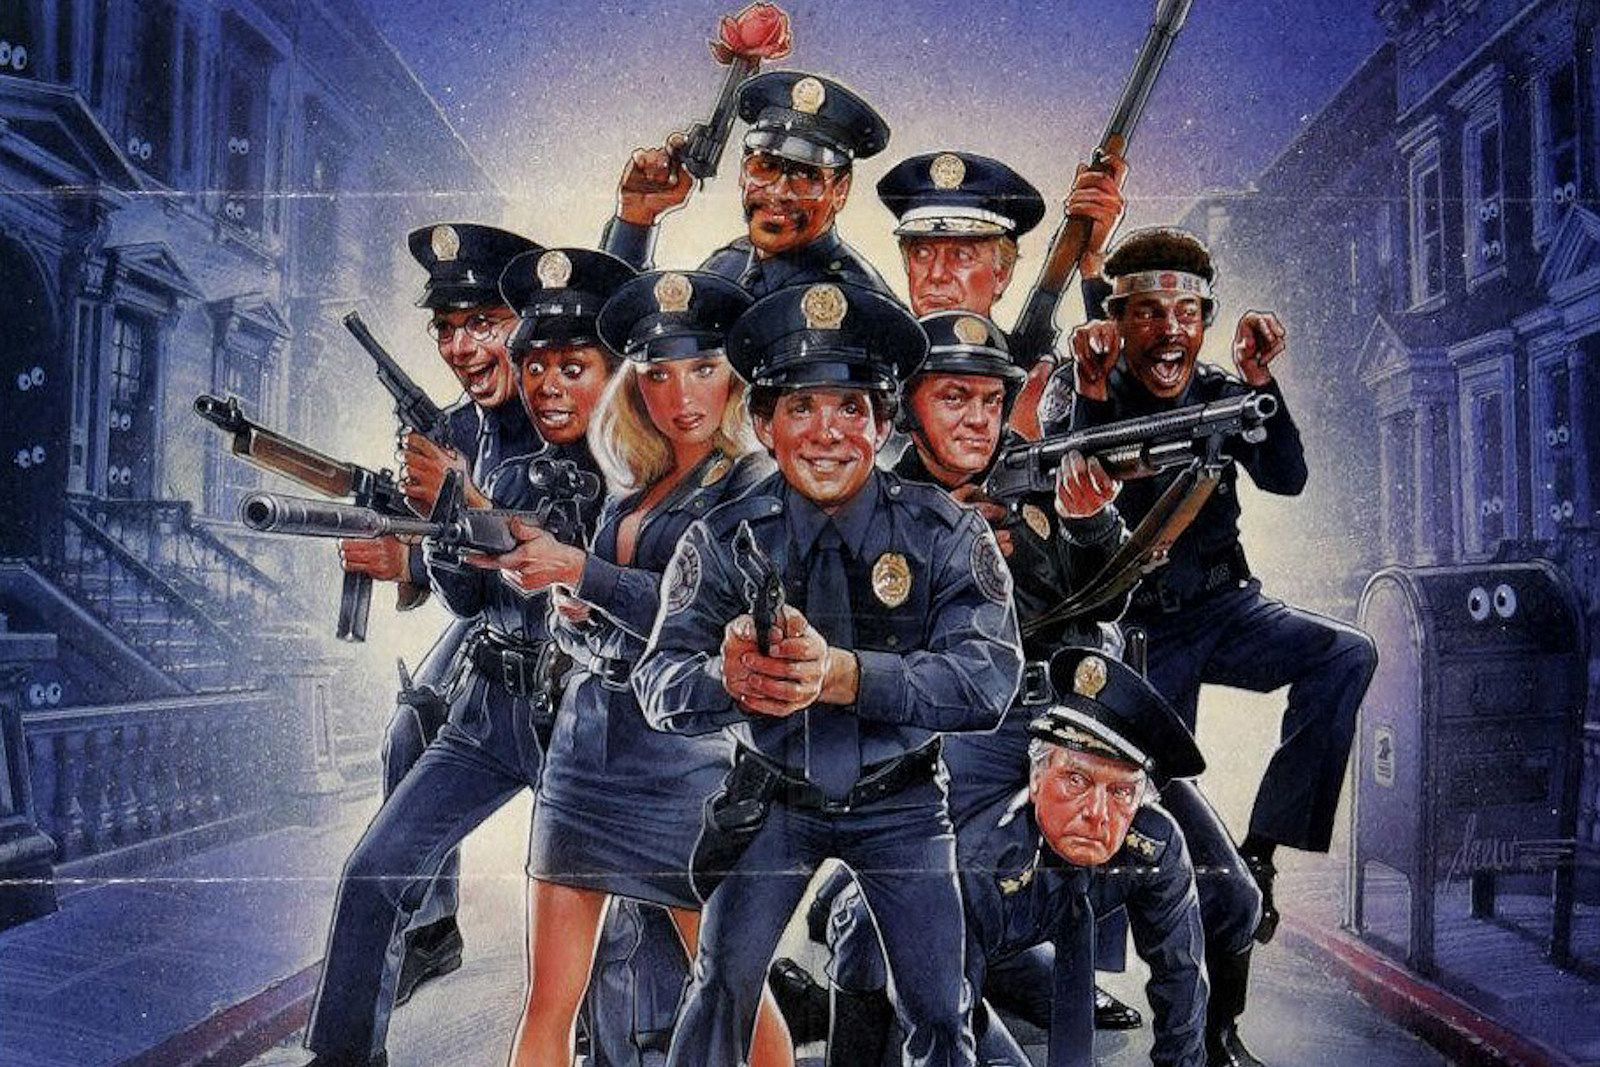 35 Years Ago: 'Police Academy 2' Scores 'Moronic' Hit